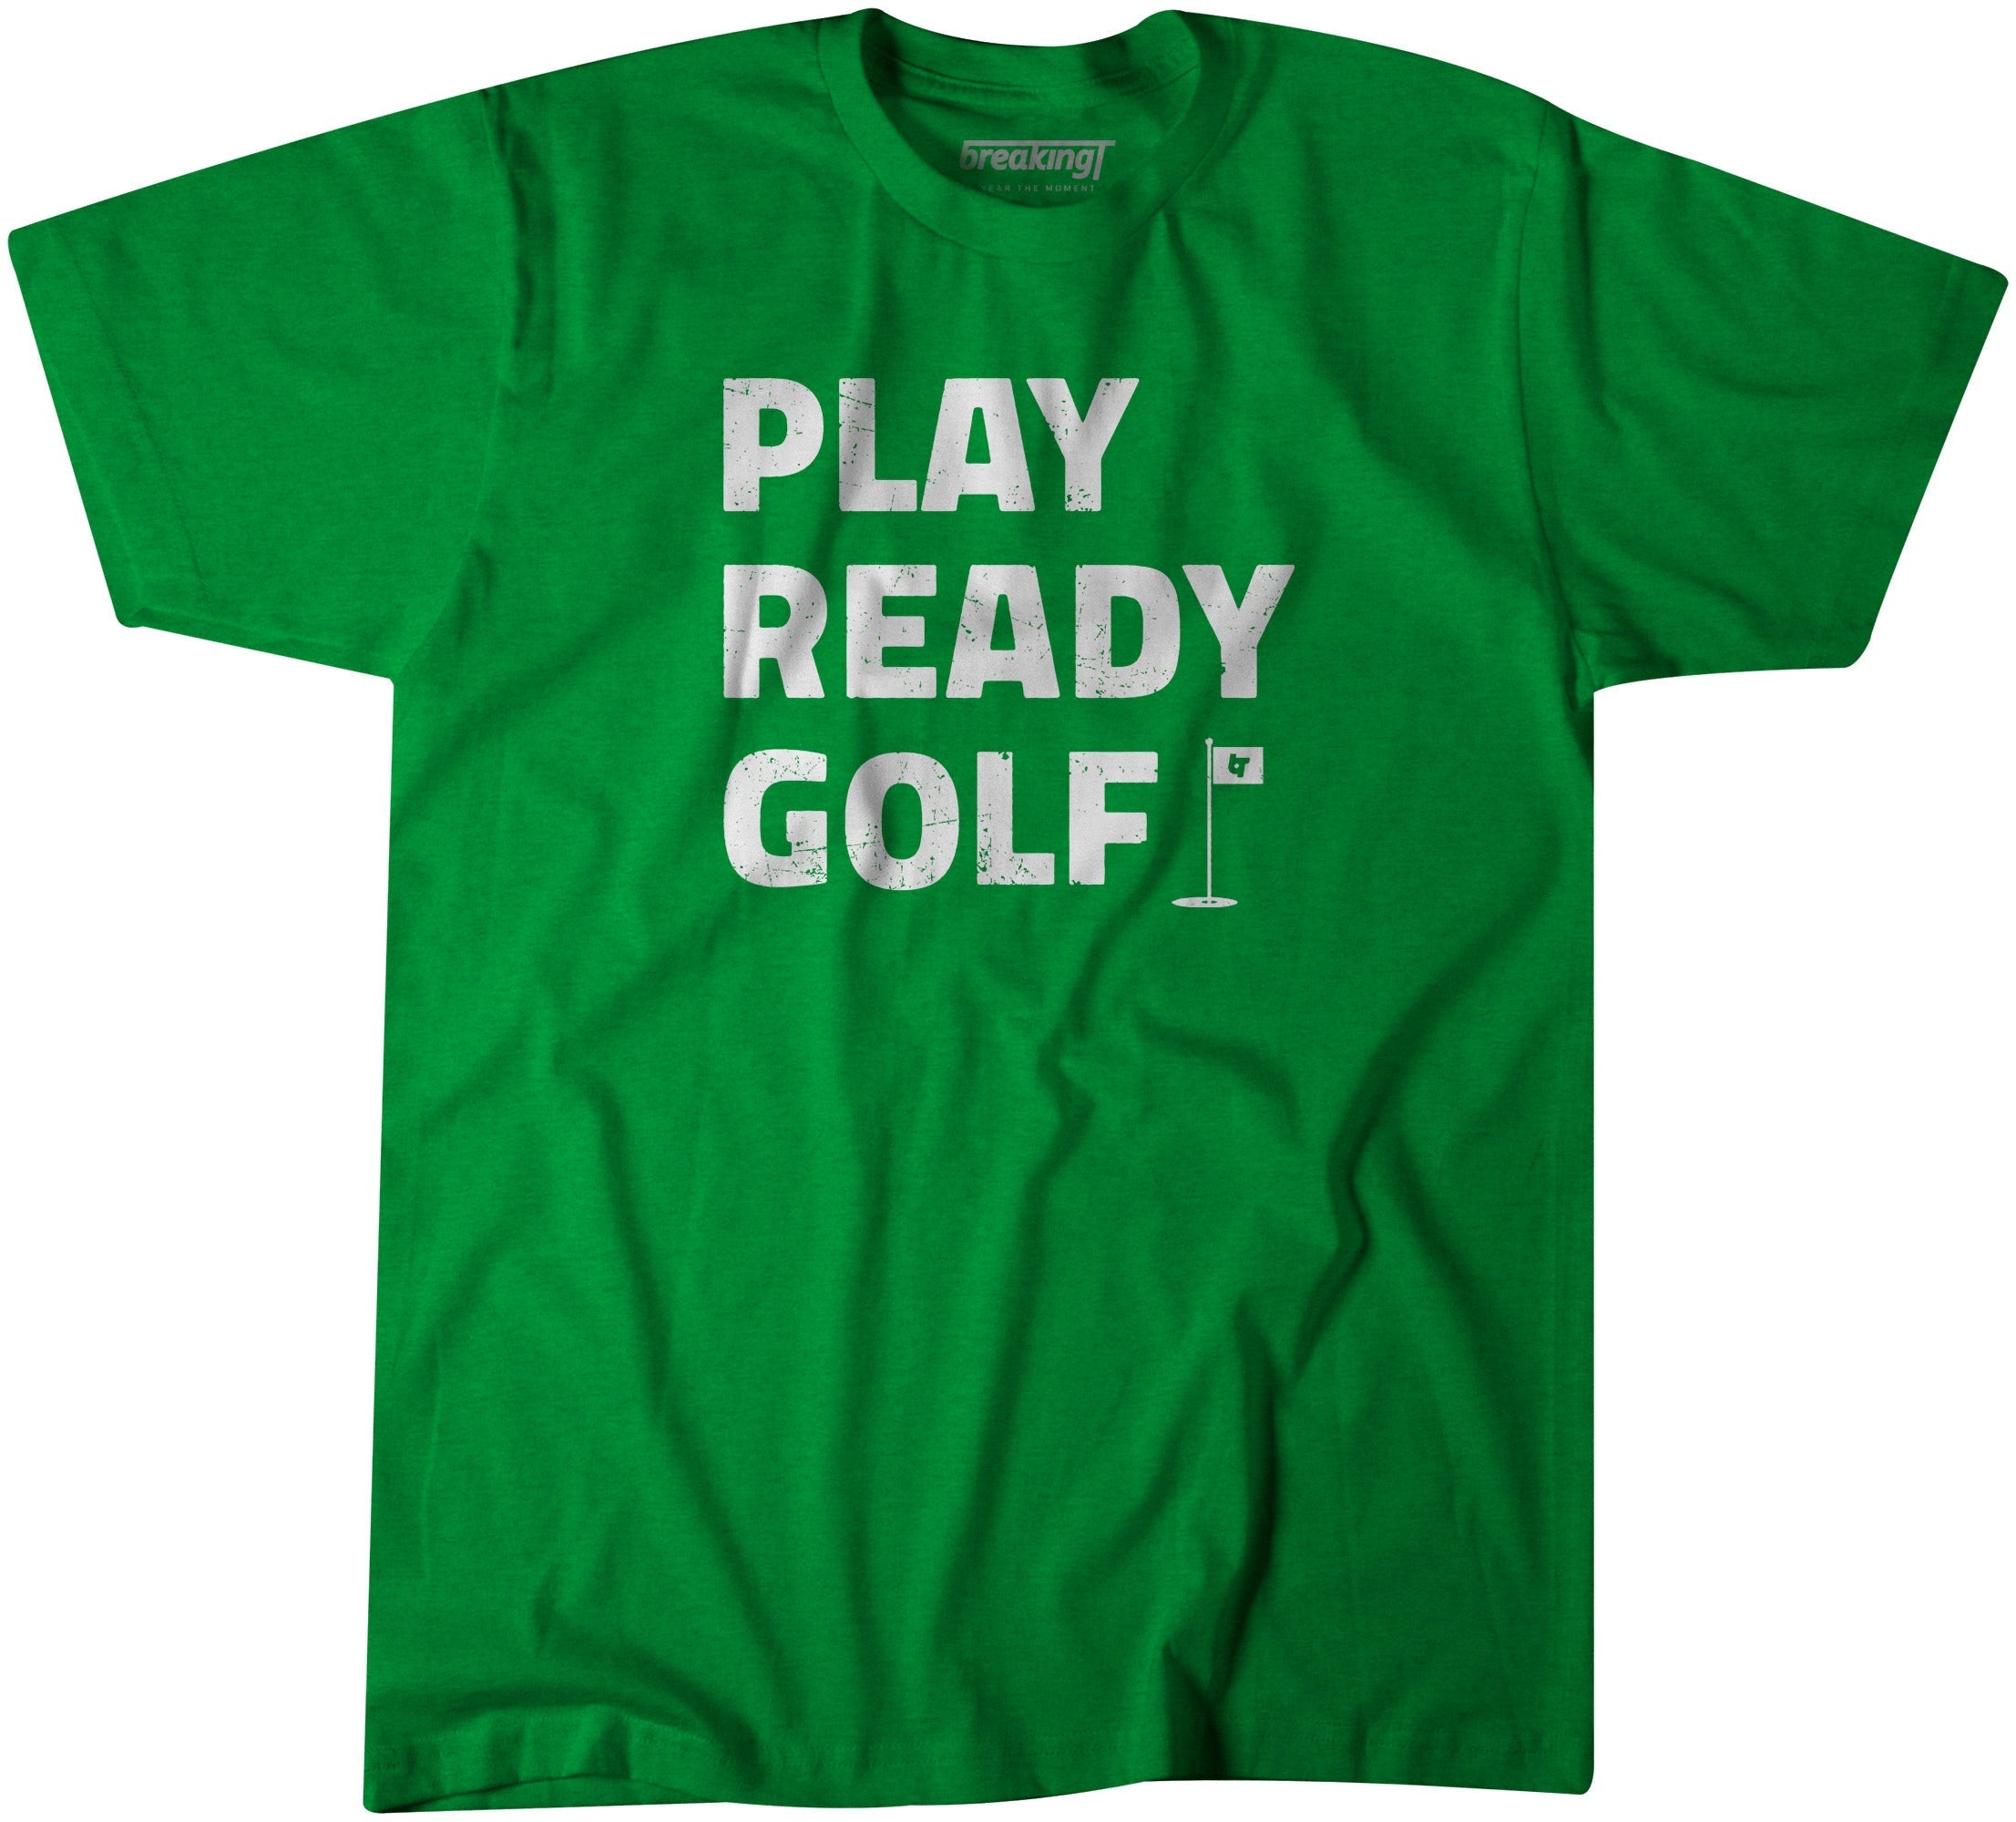 BreakingT Play Ready Golf